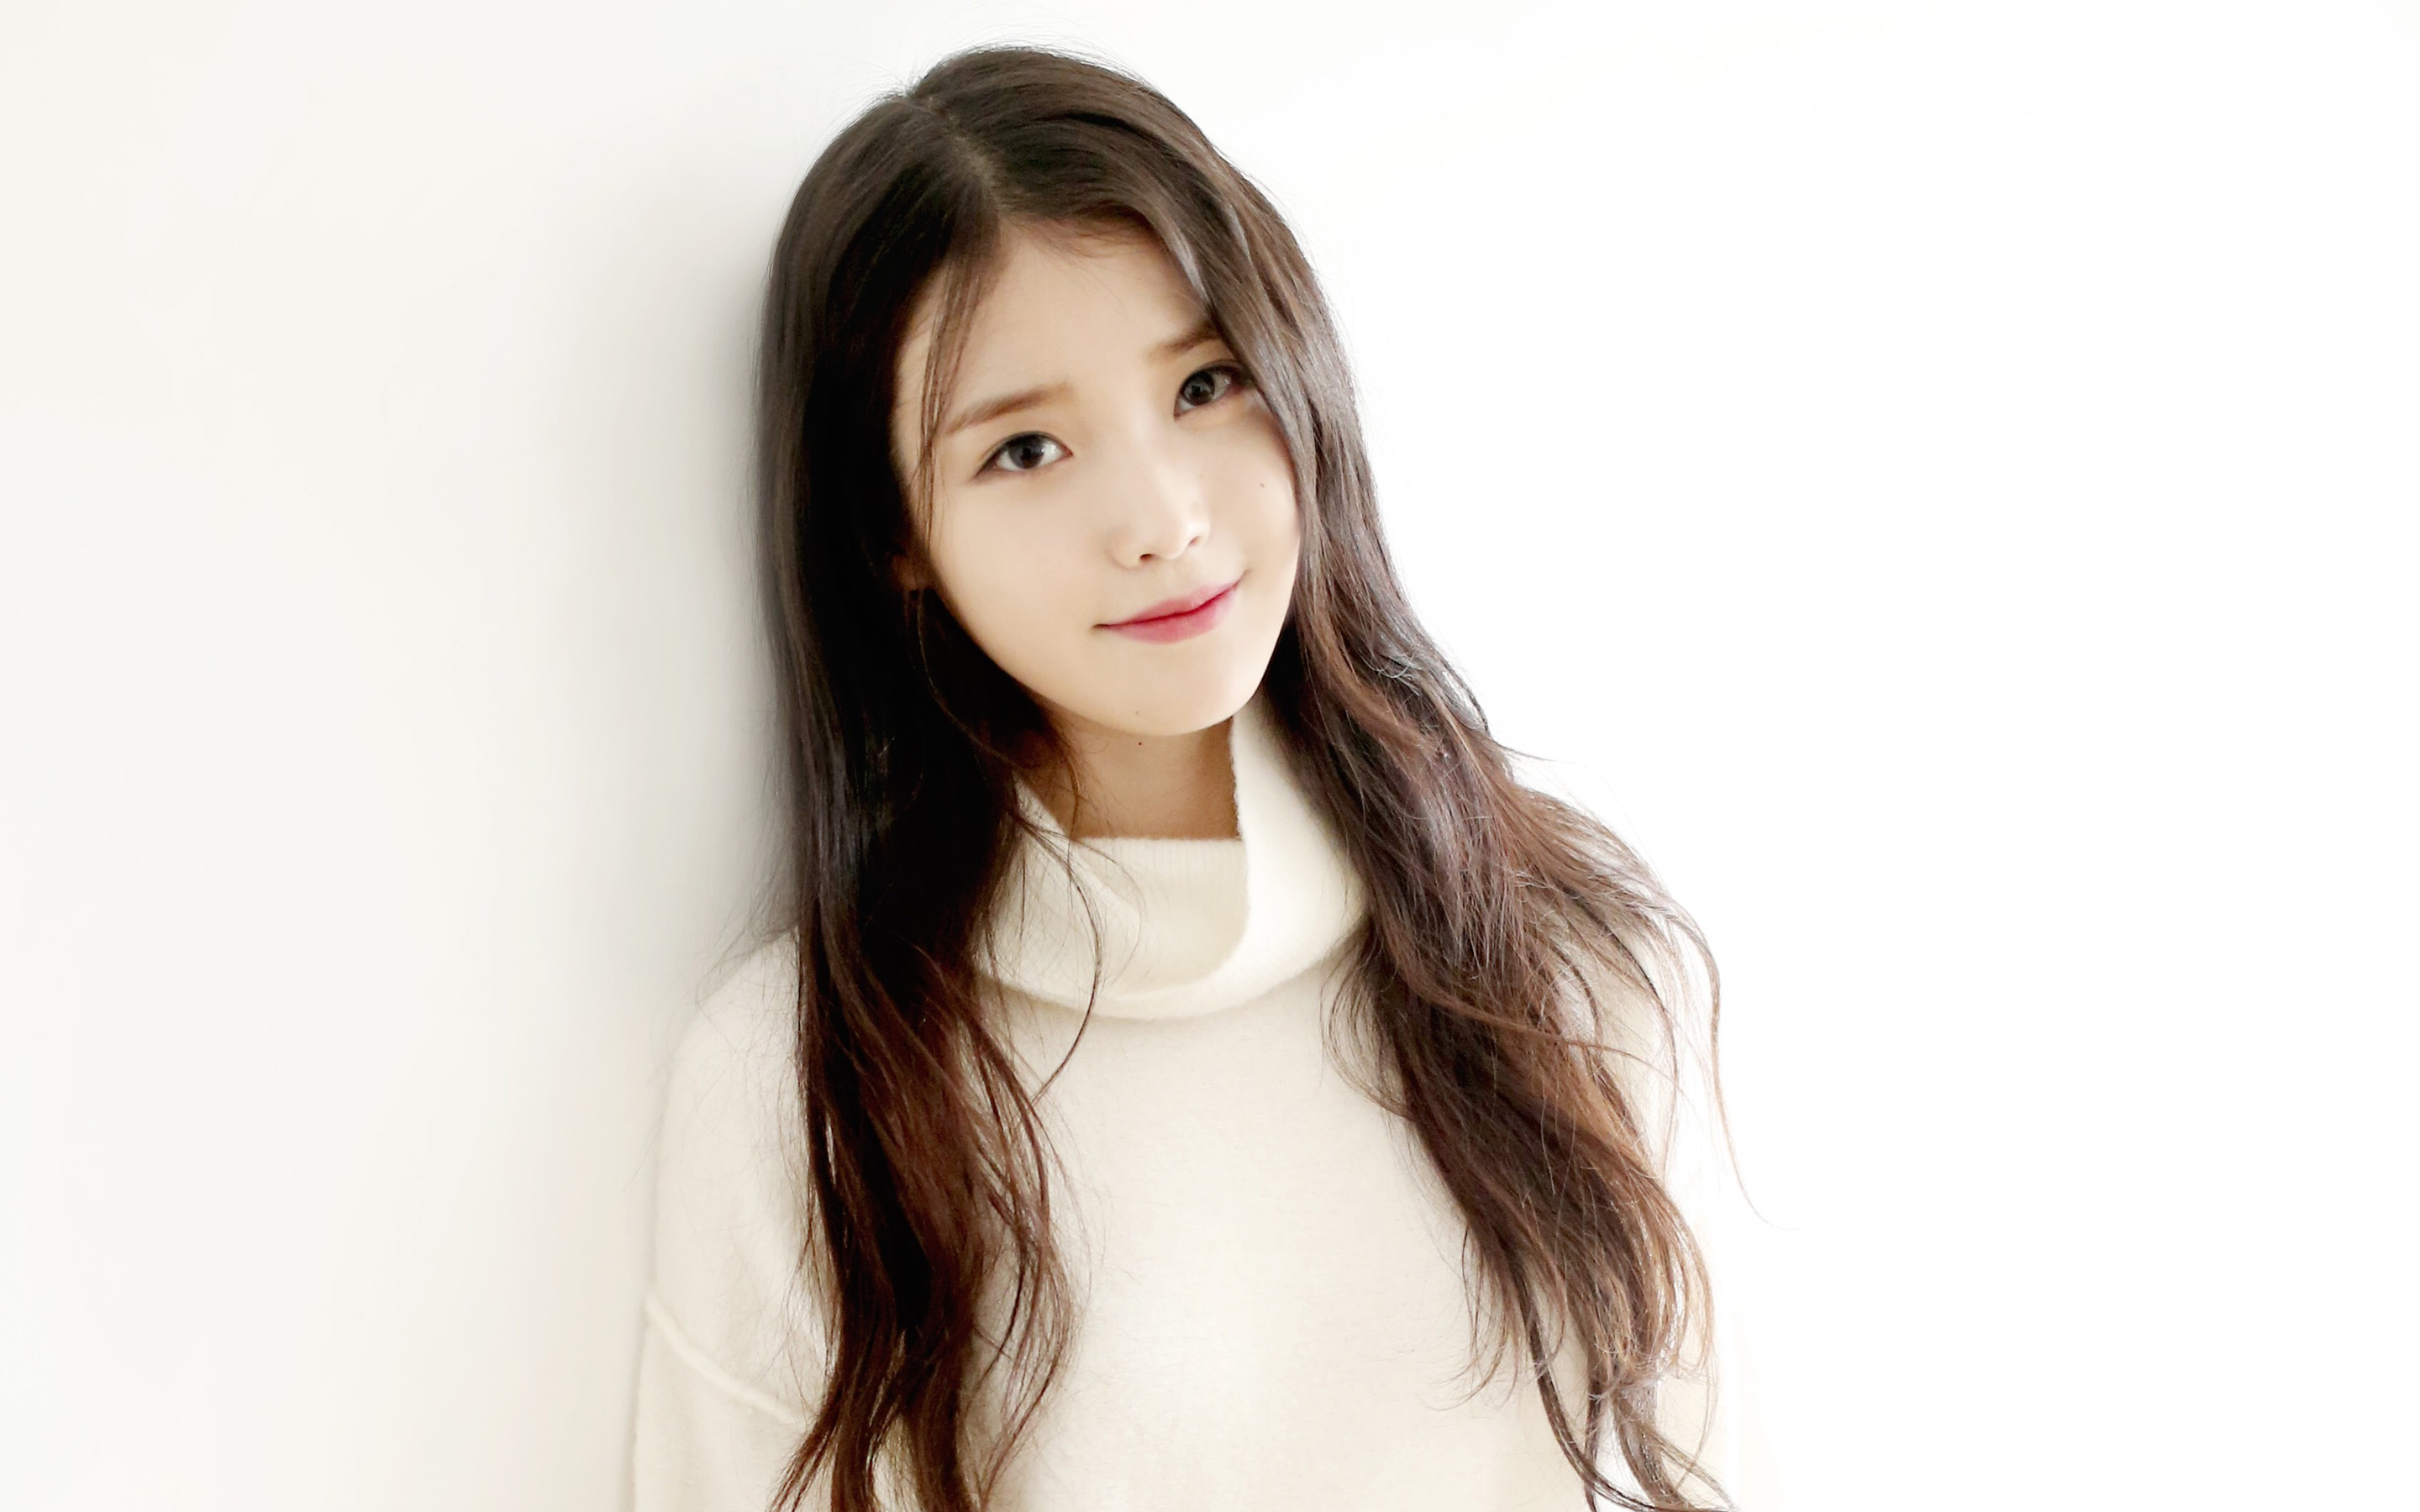 Download wallpapers iu south korean singer beauty lee ji